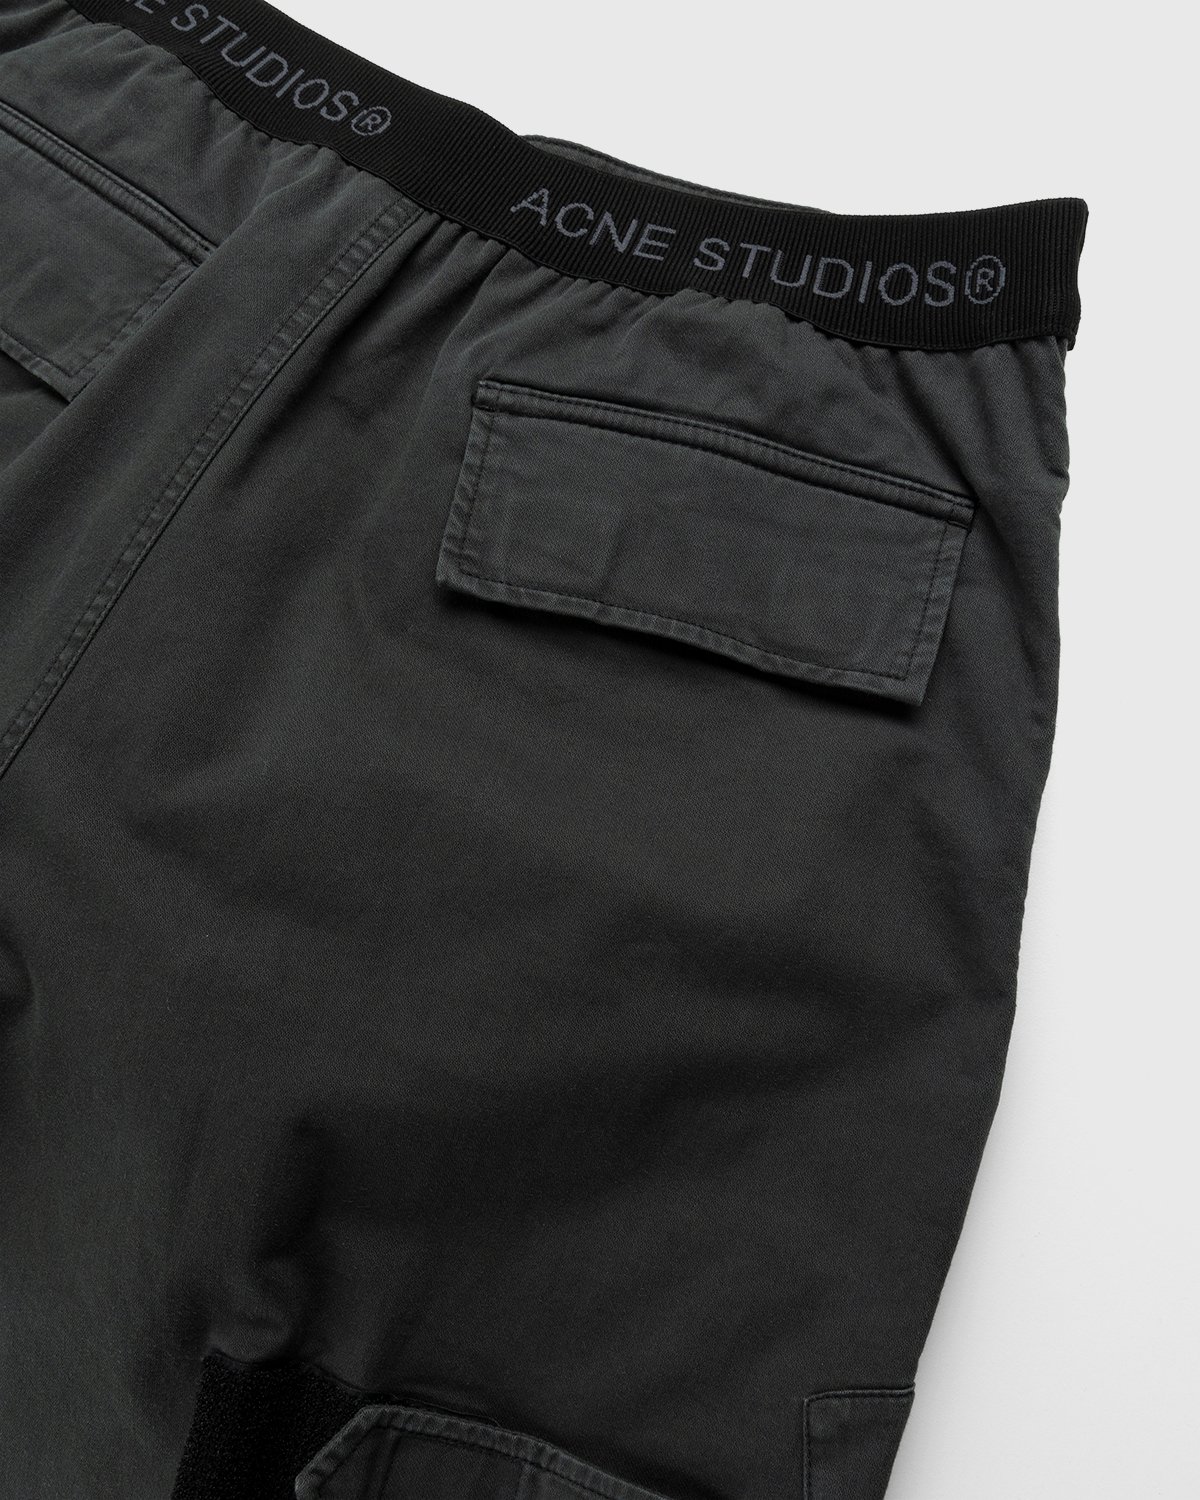 Acne Studios - Chevron Cargo Pants Anthracite Grey - Clothing - Grey - Image 4